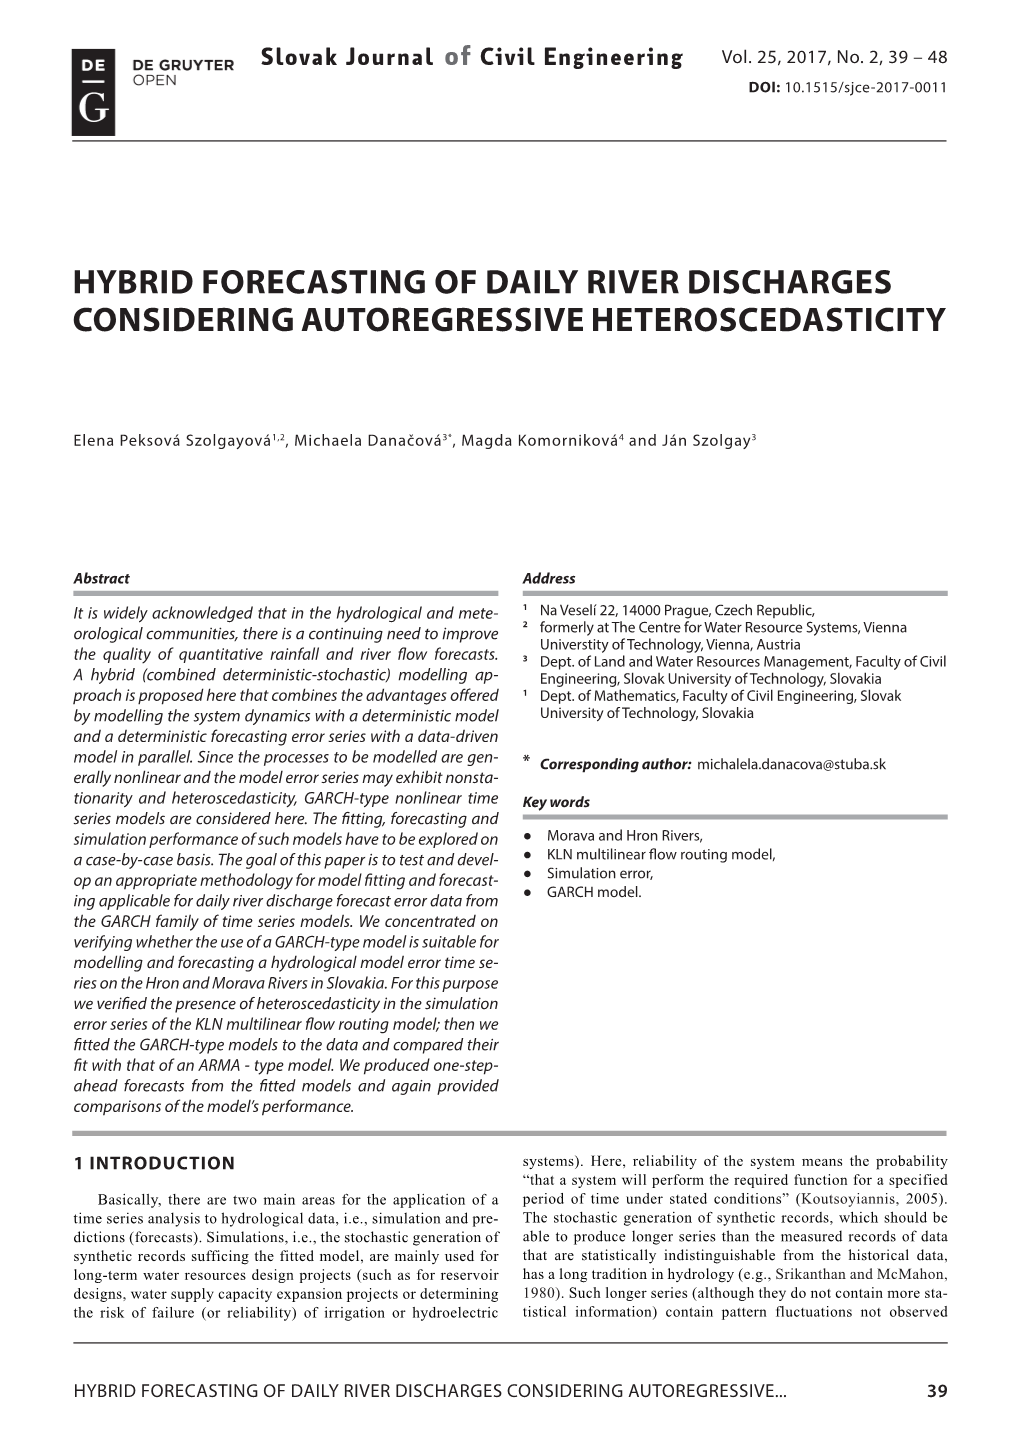 Hybrid Forecasting of Daily River Discharges Considering Autoregressive Heteroscedasticity